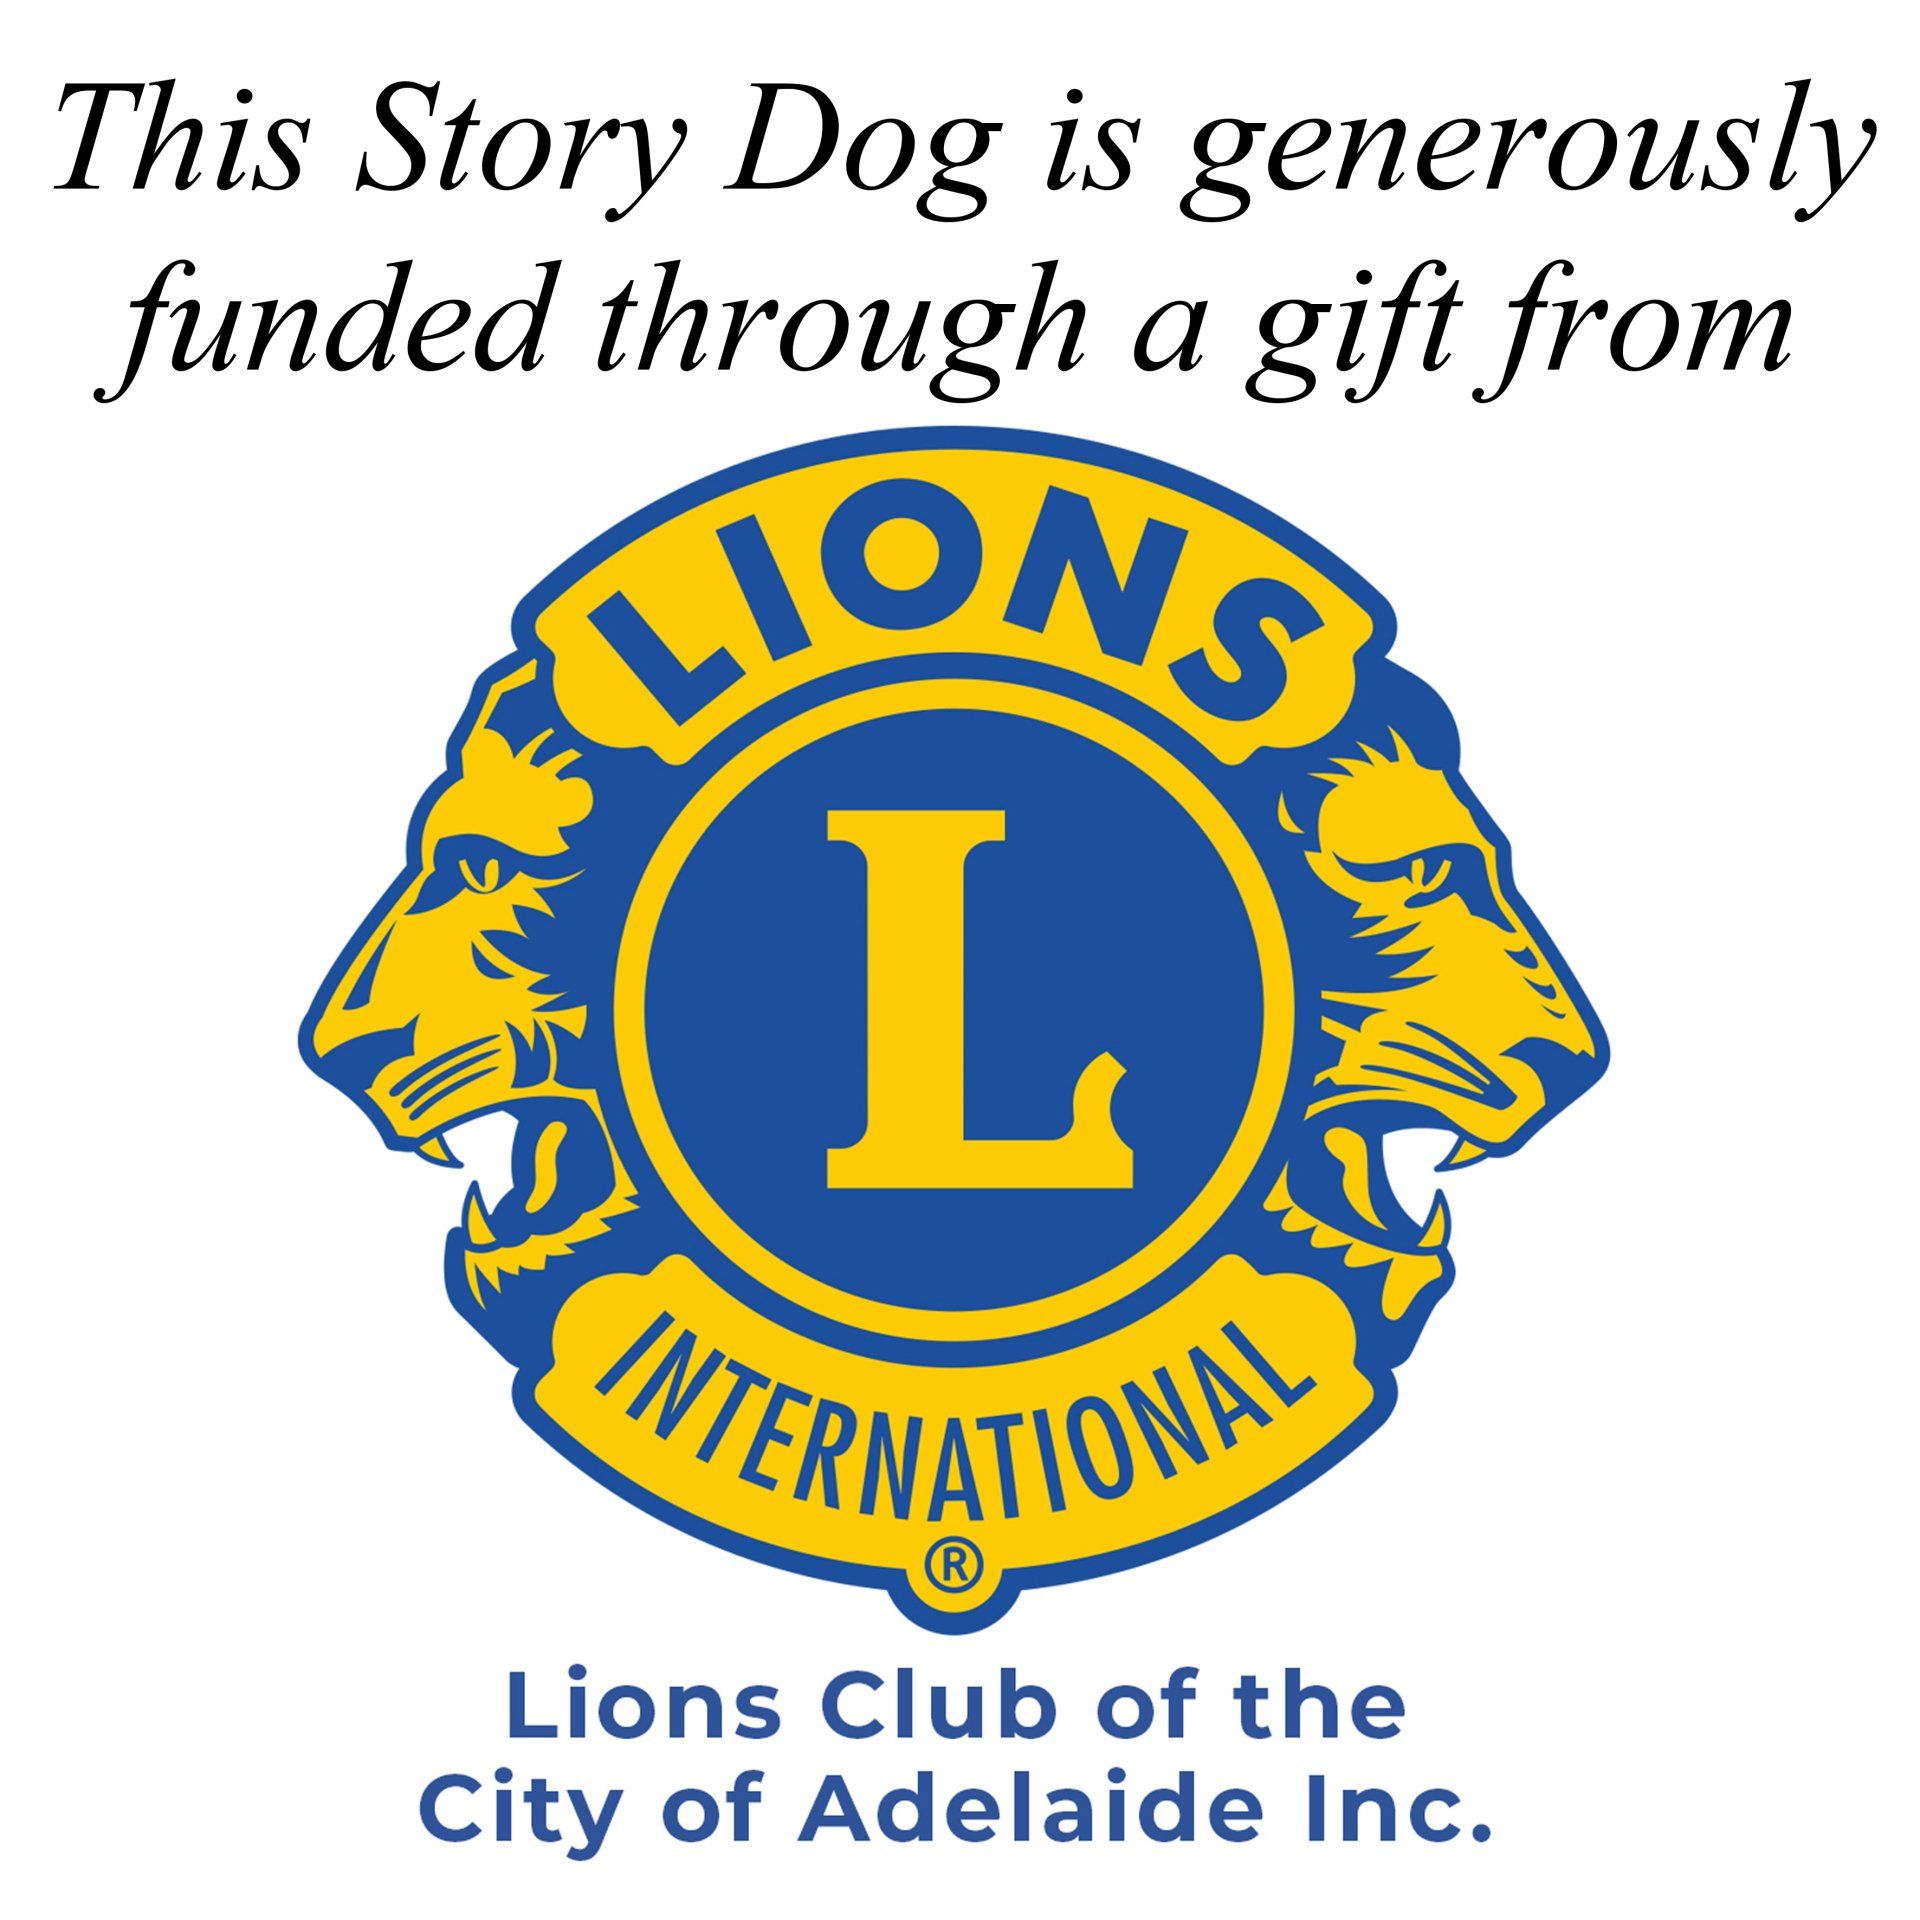 Adelaide City Lions Club